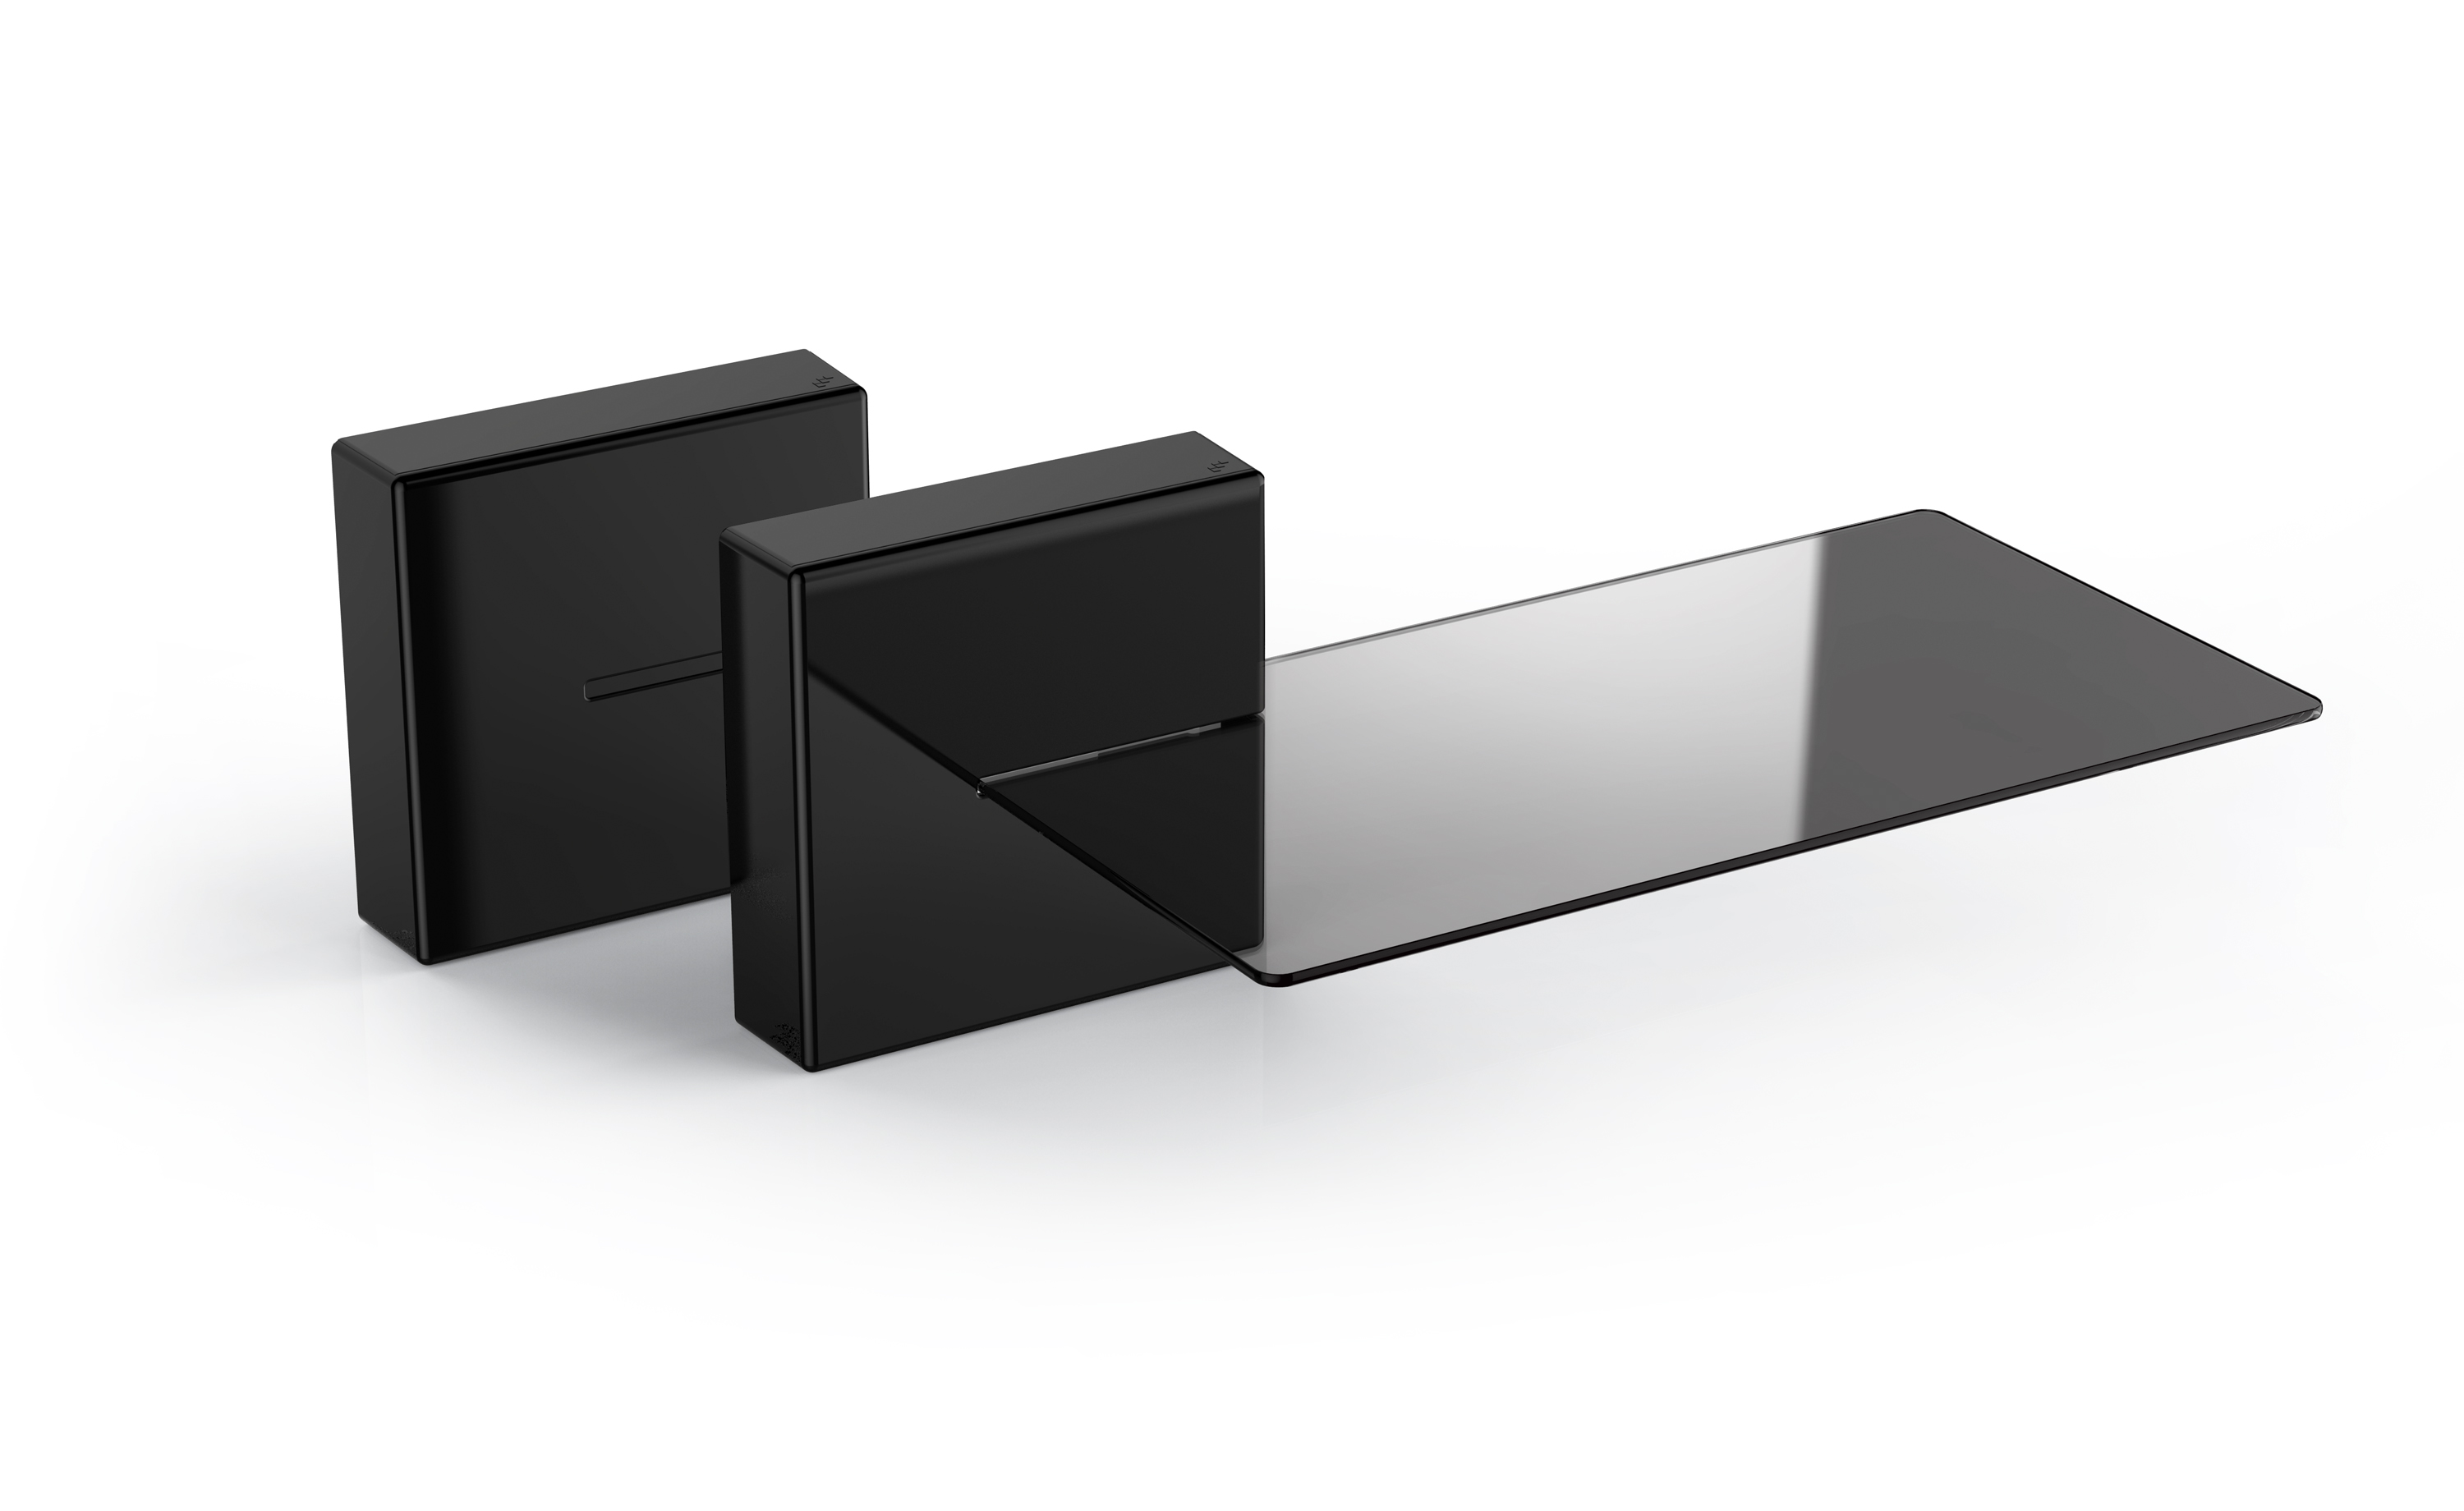 Ghost cube shelf, modular cable cover system avec verre shelf, noir